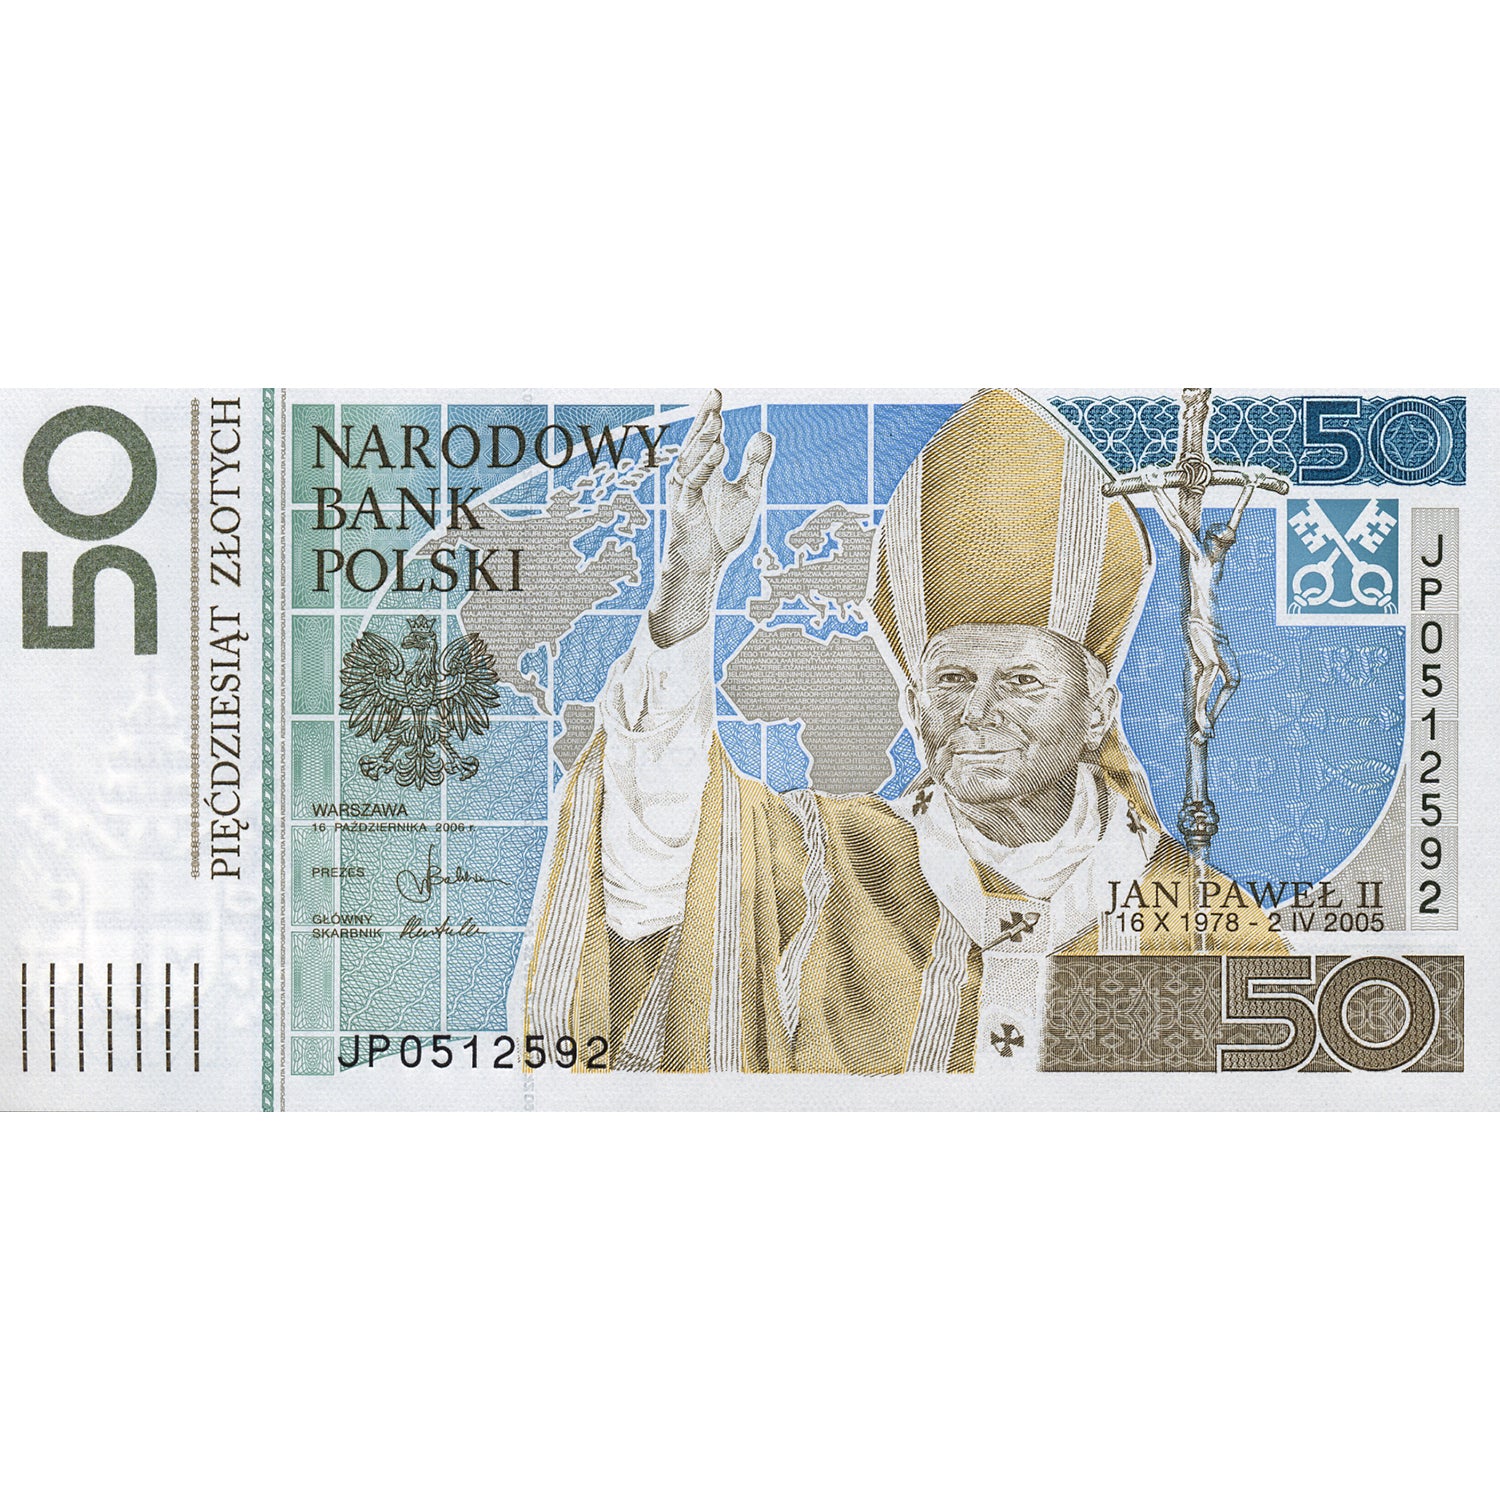 ‚ÄúGlory Banknote‚Äù